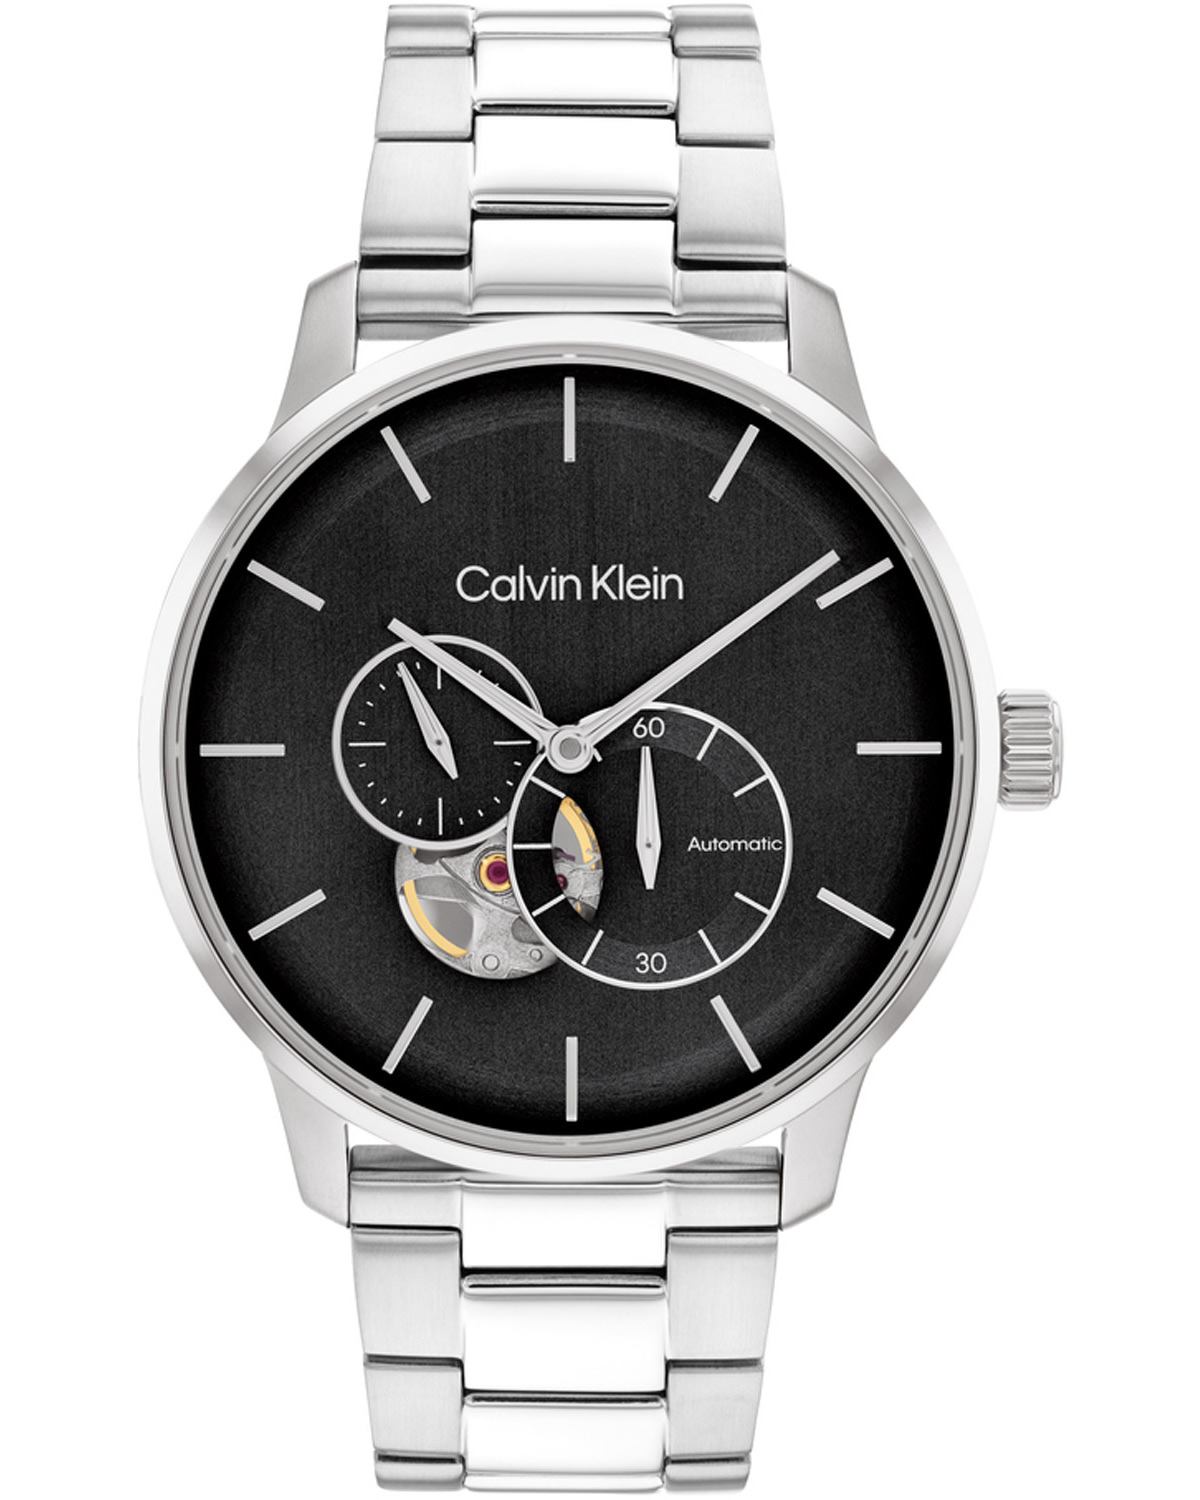 Calvin Klein Automatic 25200148 - Filippakos Jewelry store